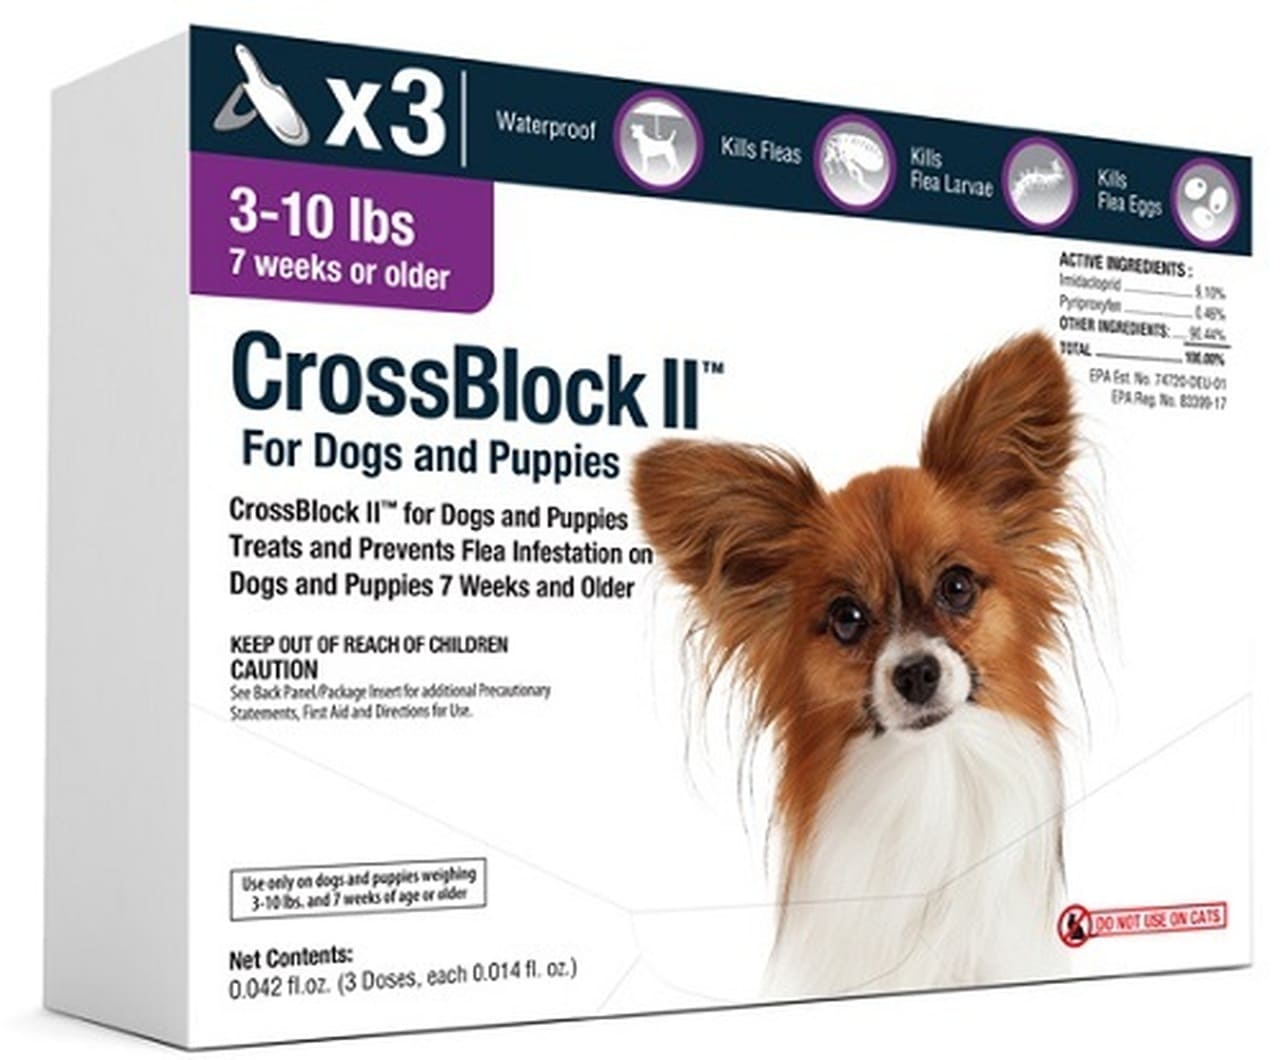 CrossBlock II for Dogs